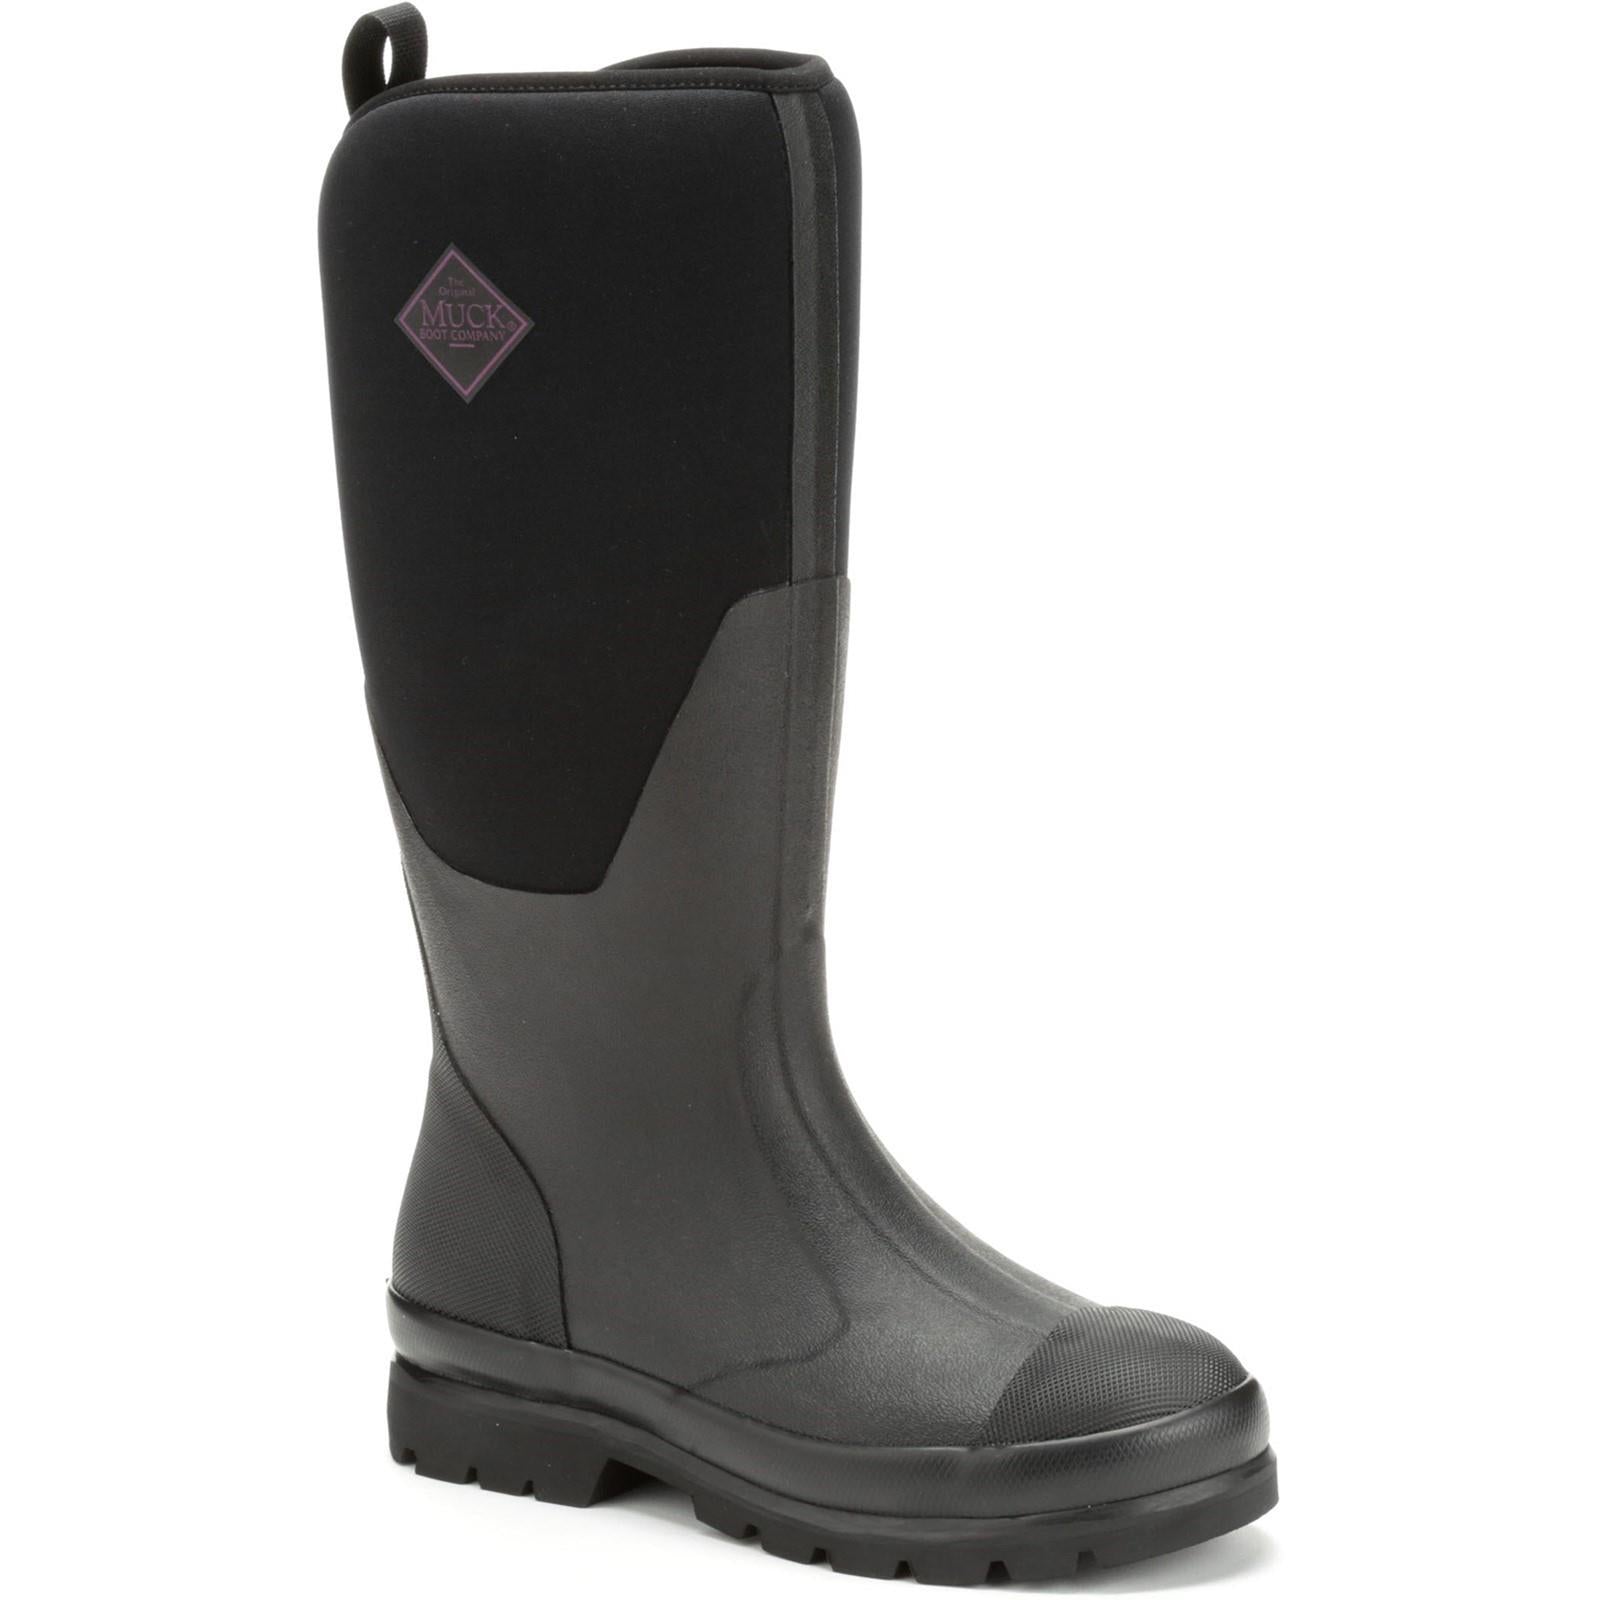 Muck Boots Chore Classic Tall black ladies waterproof wellington boots